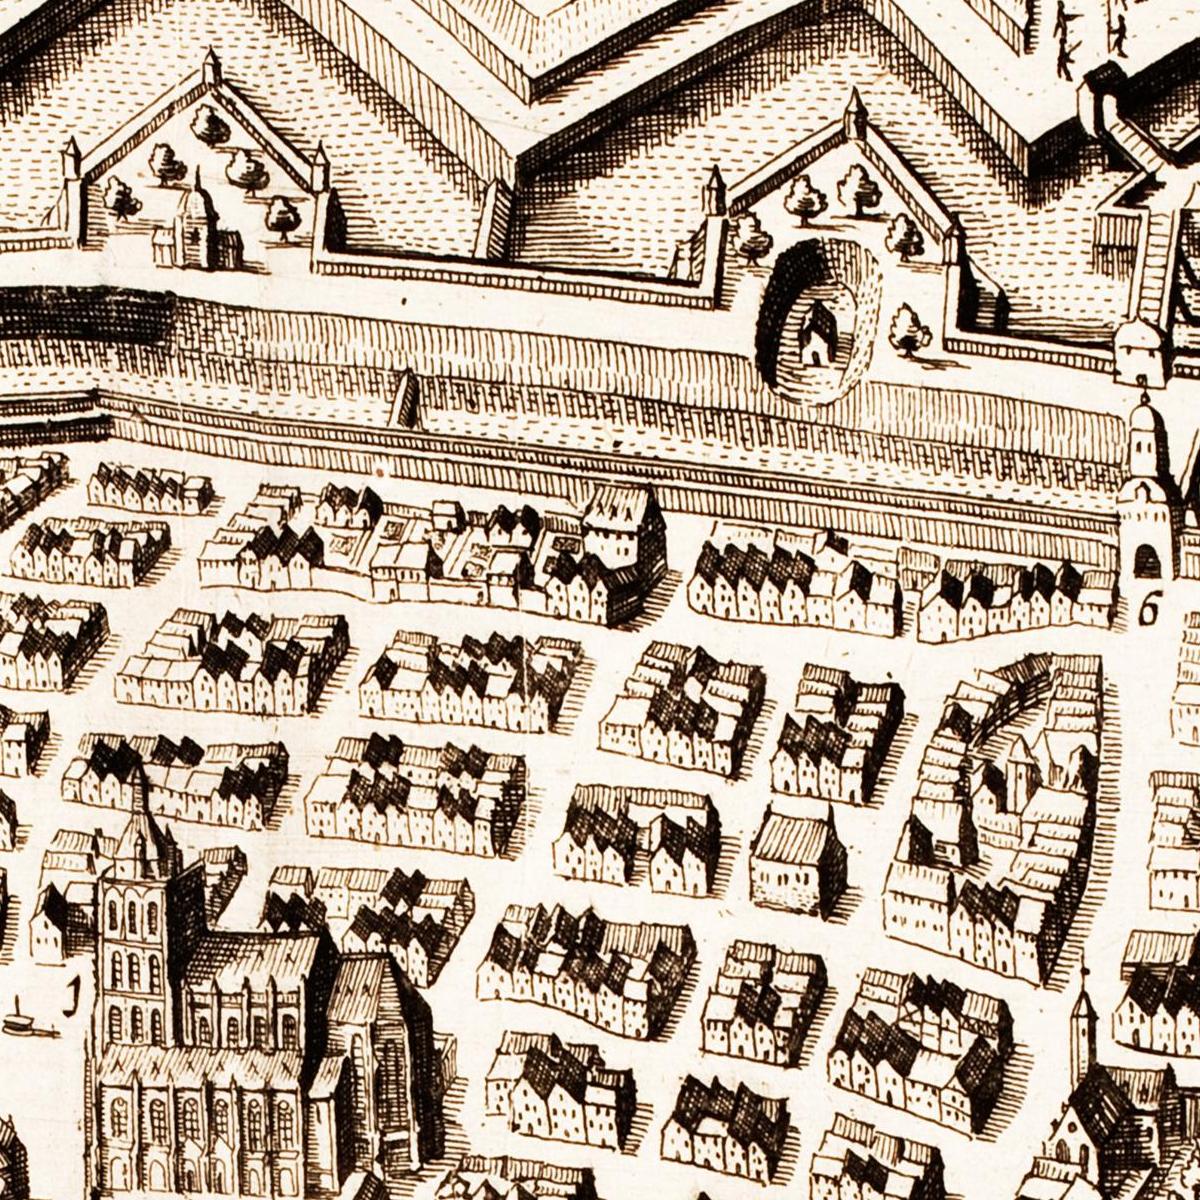 Historischer Stadtplan Ulm um 1642